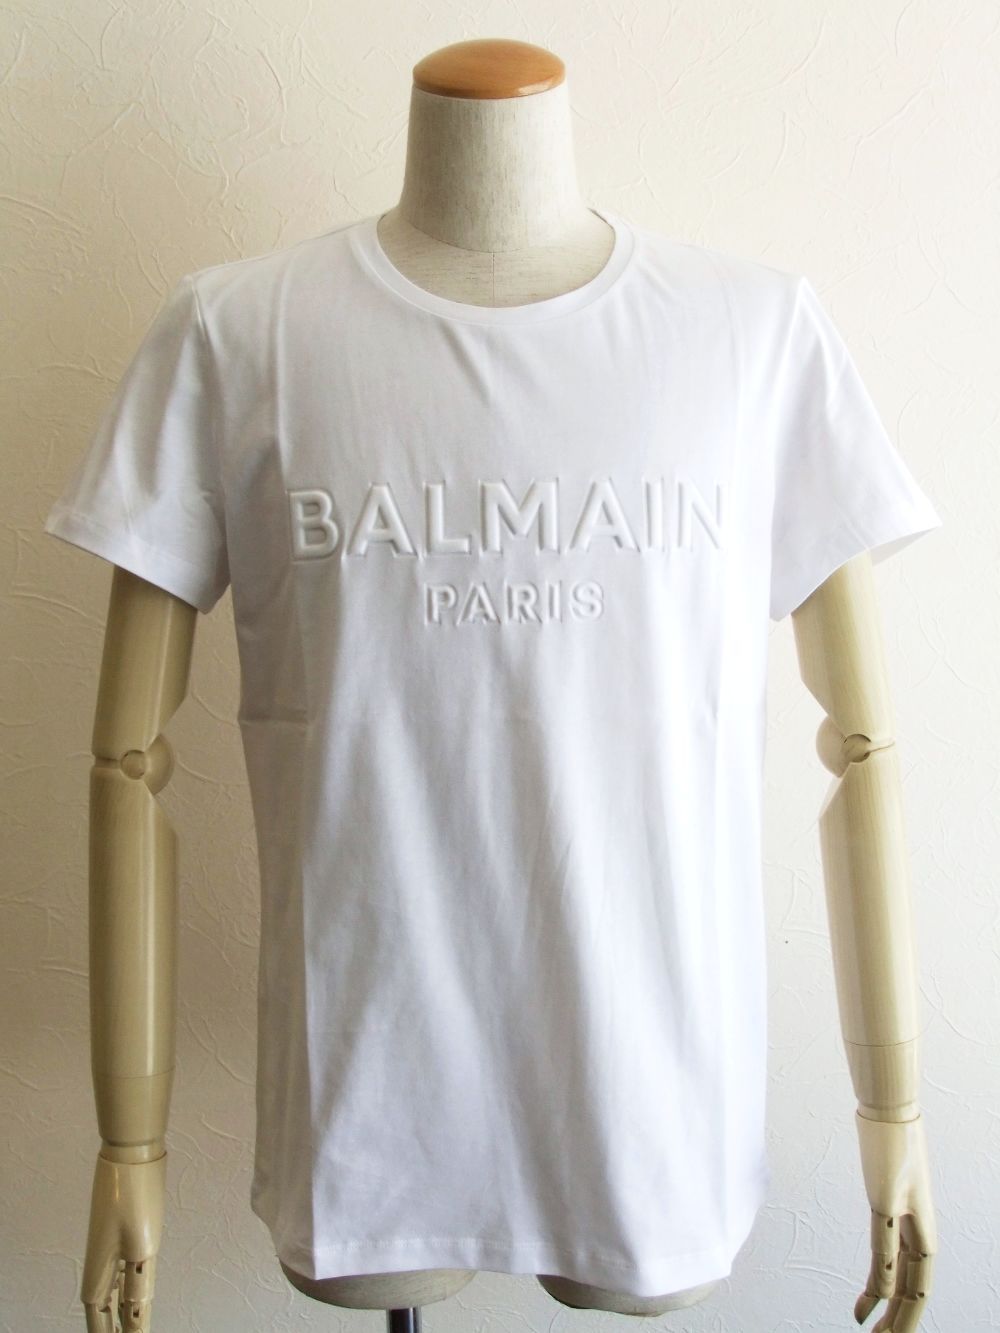 BALMAIN - ホワイト コットン Tシャツ ホワイト Balmain Paris ...